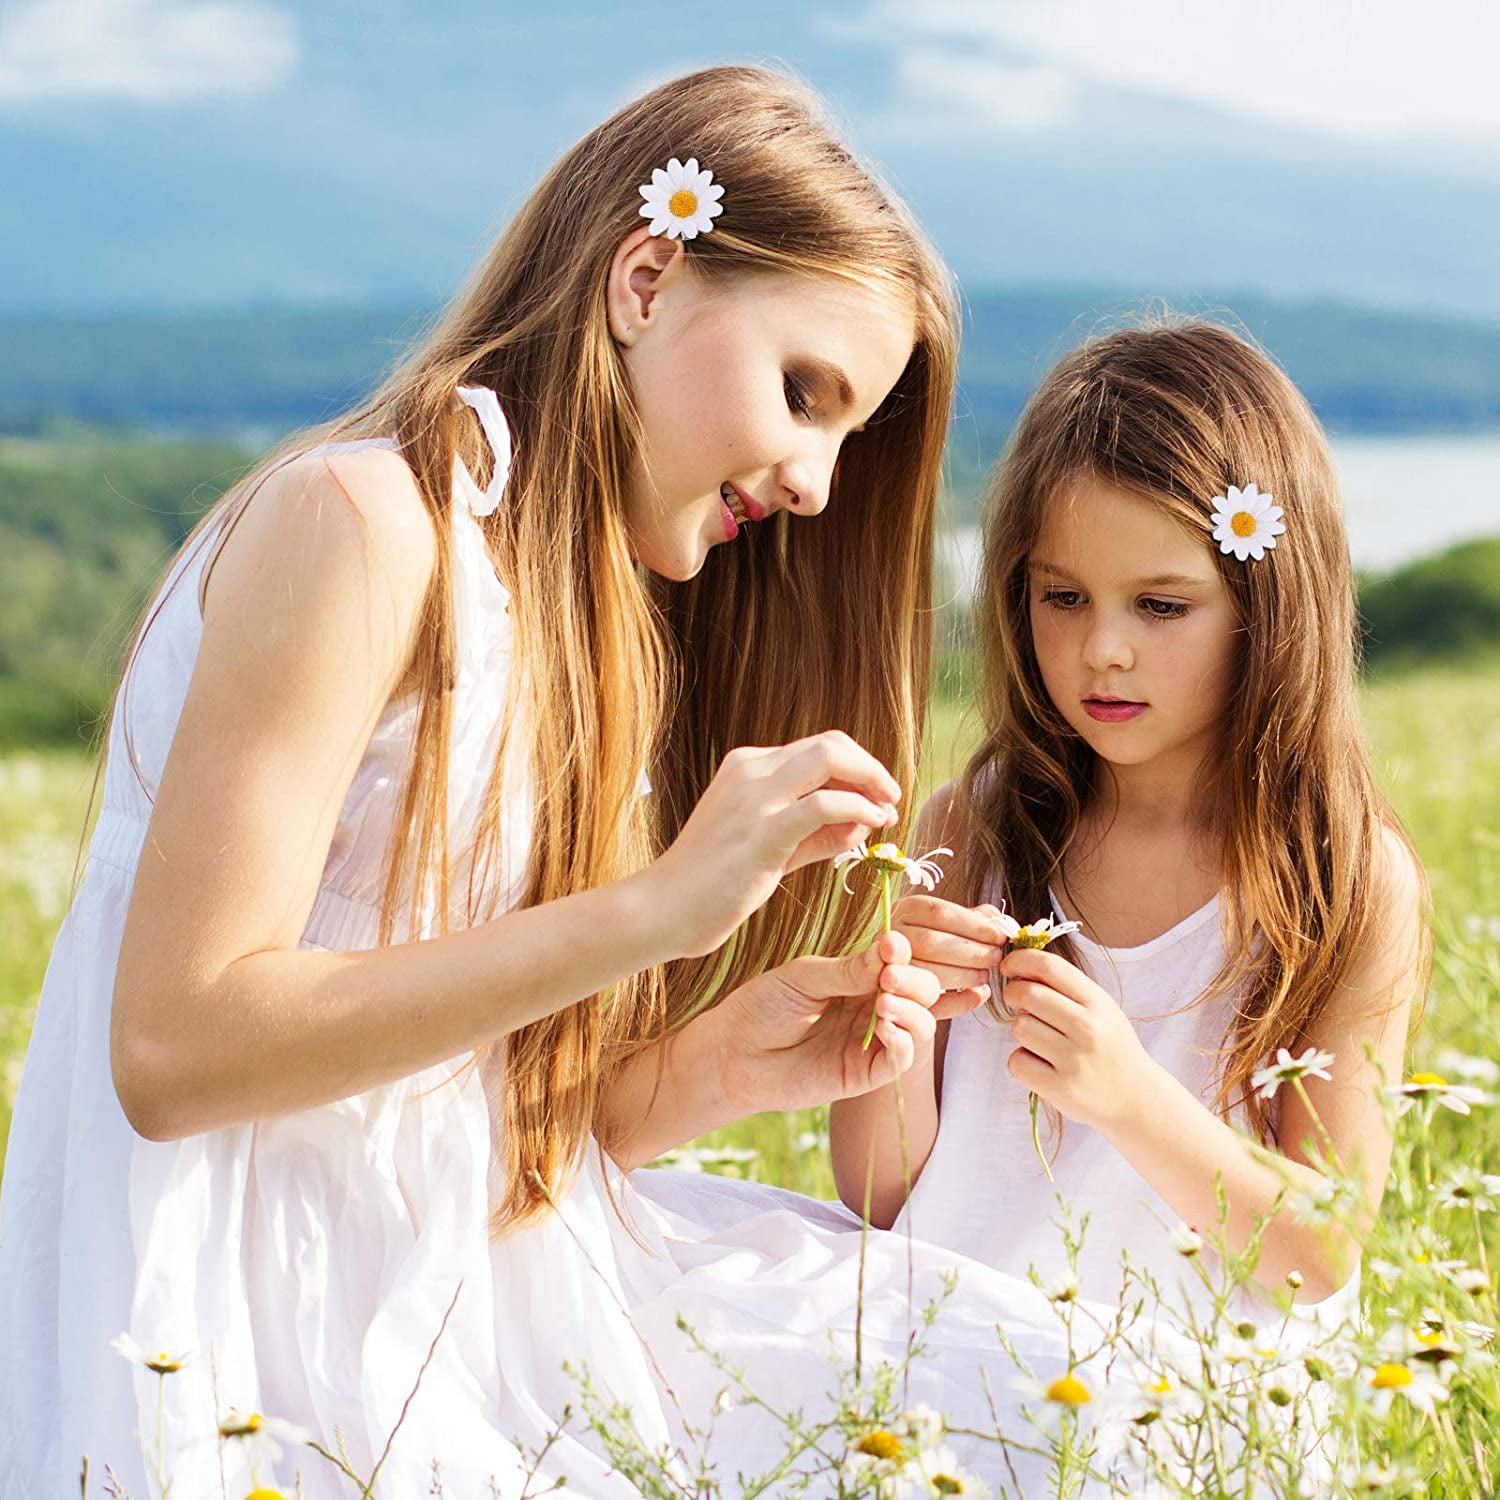 Girls Kids Wedding Daisy Flower Hair Barrettes Snap Clips Holder Accessories 